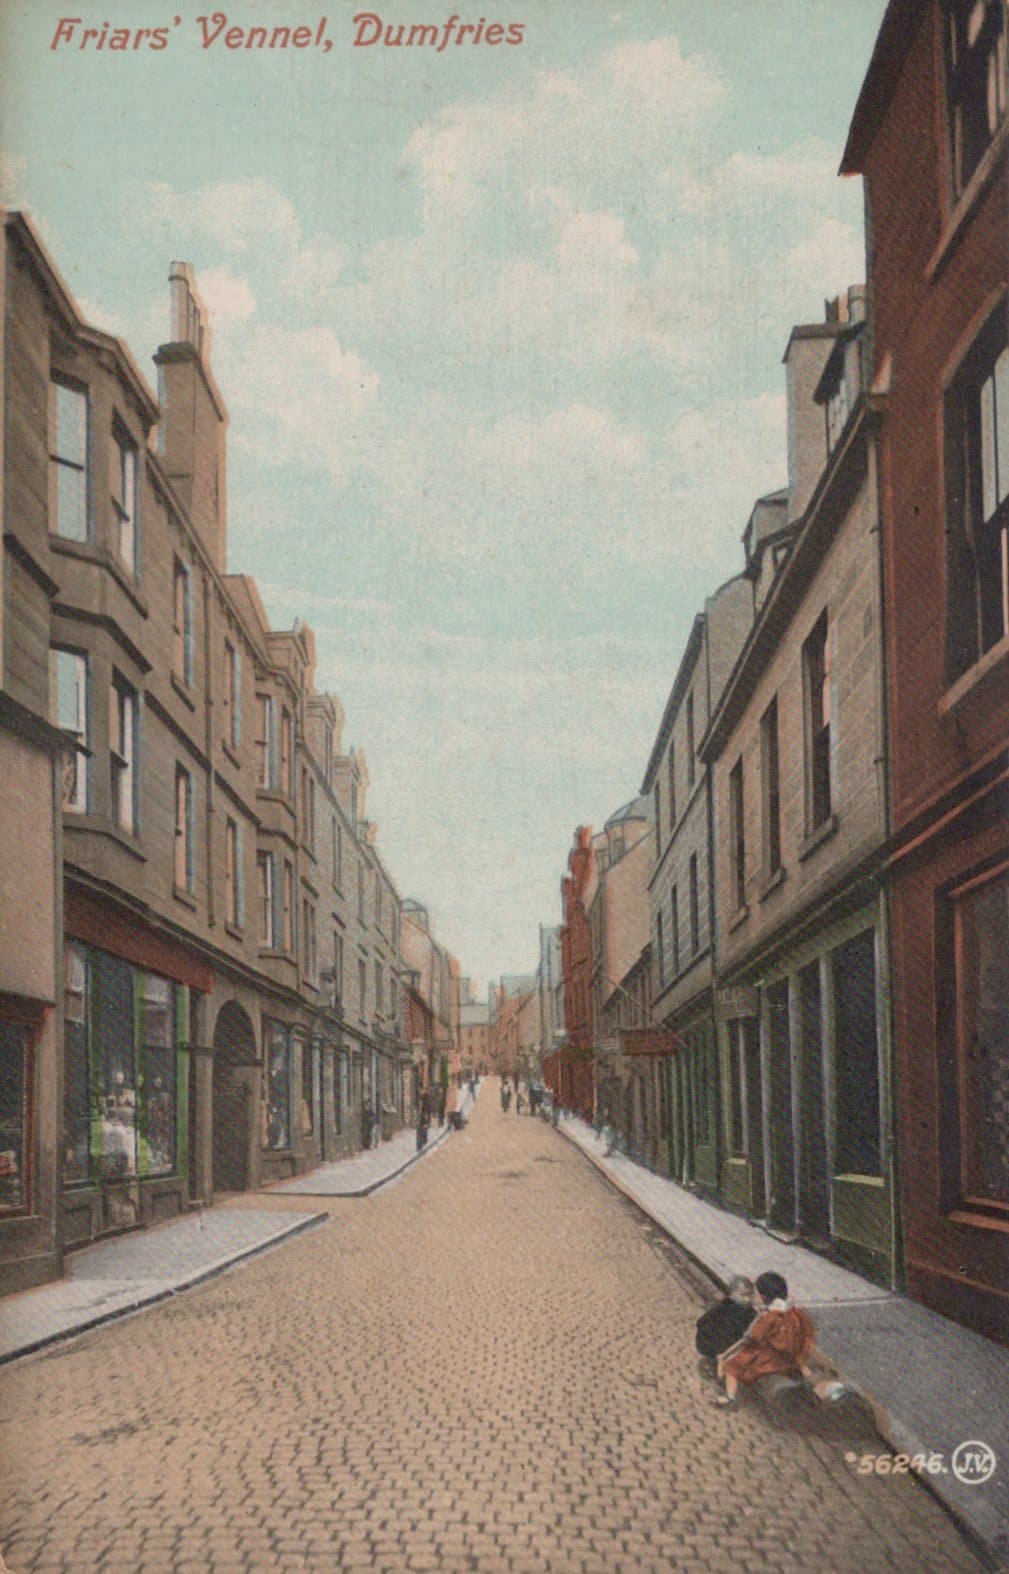 Scotland Postcard - Friars' Vennel, Dumfries - Mo’s Postcards 